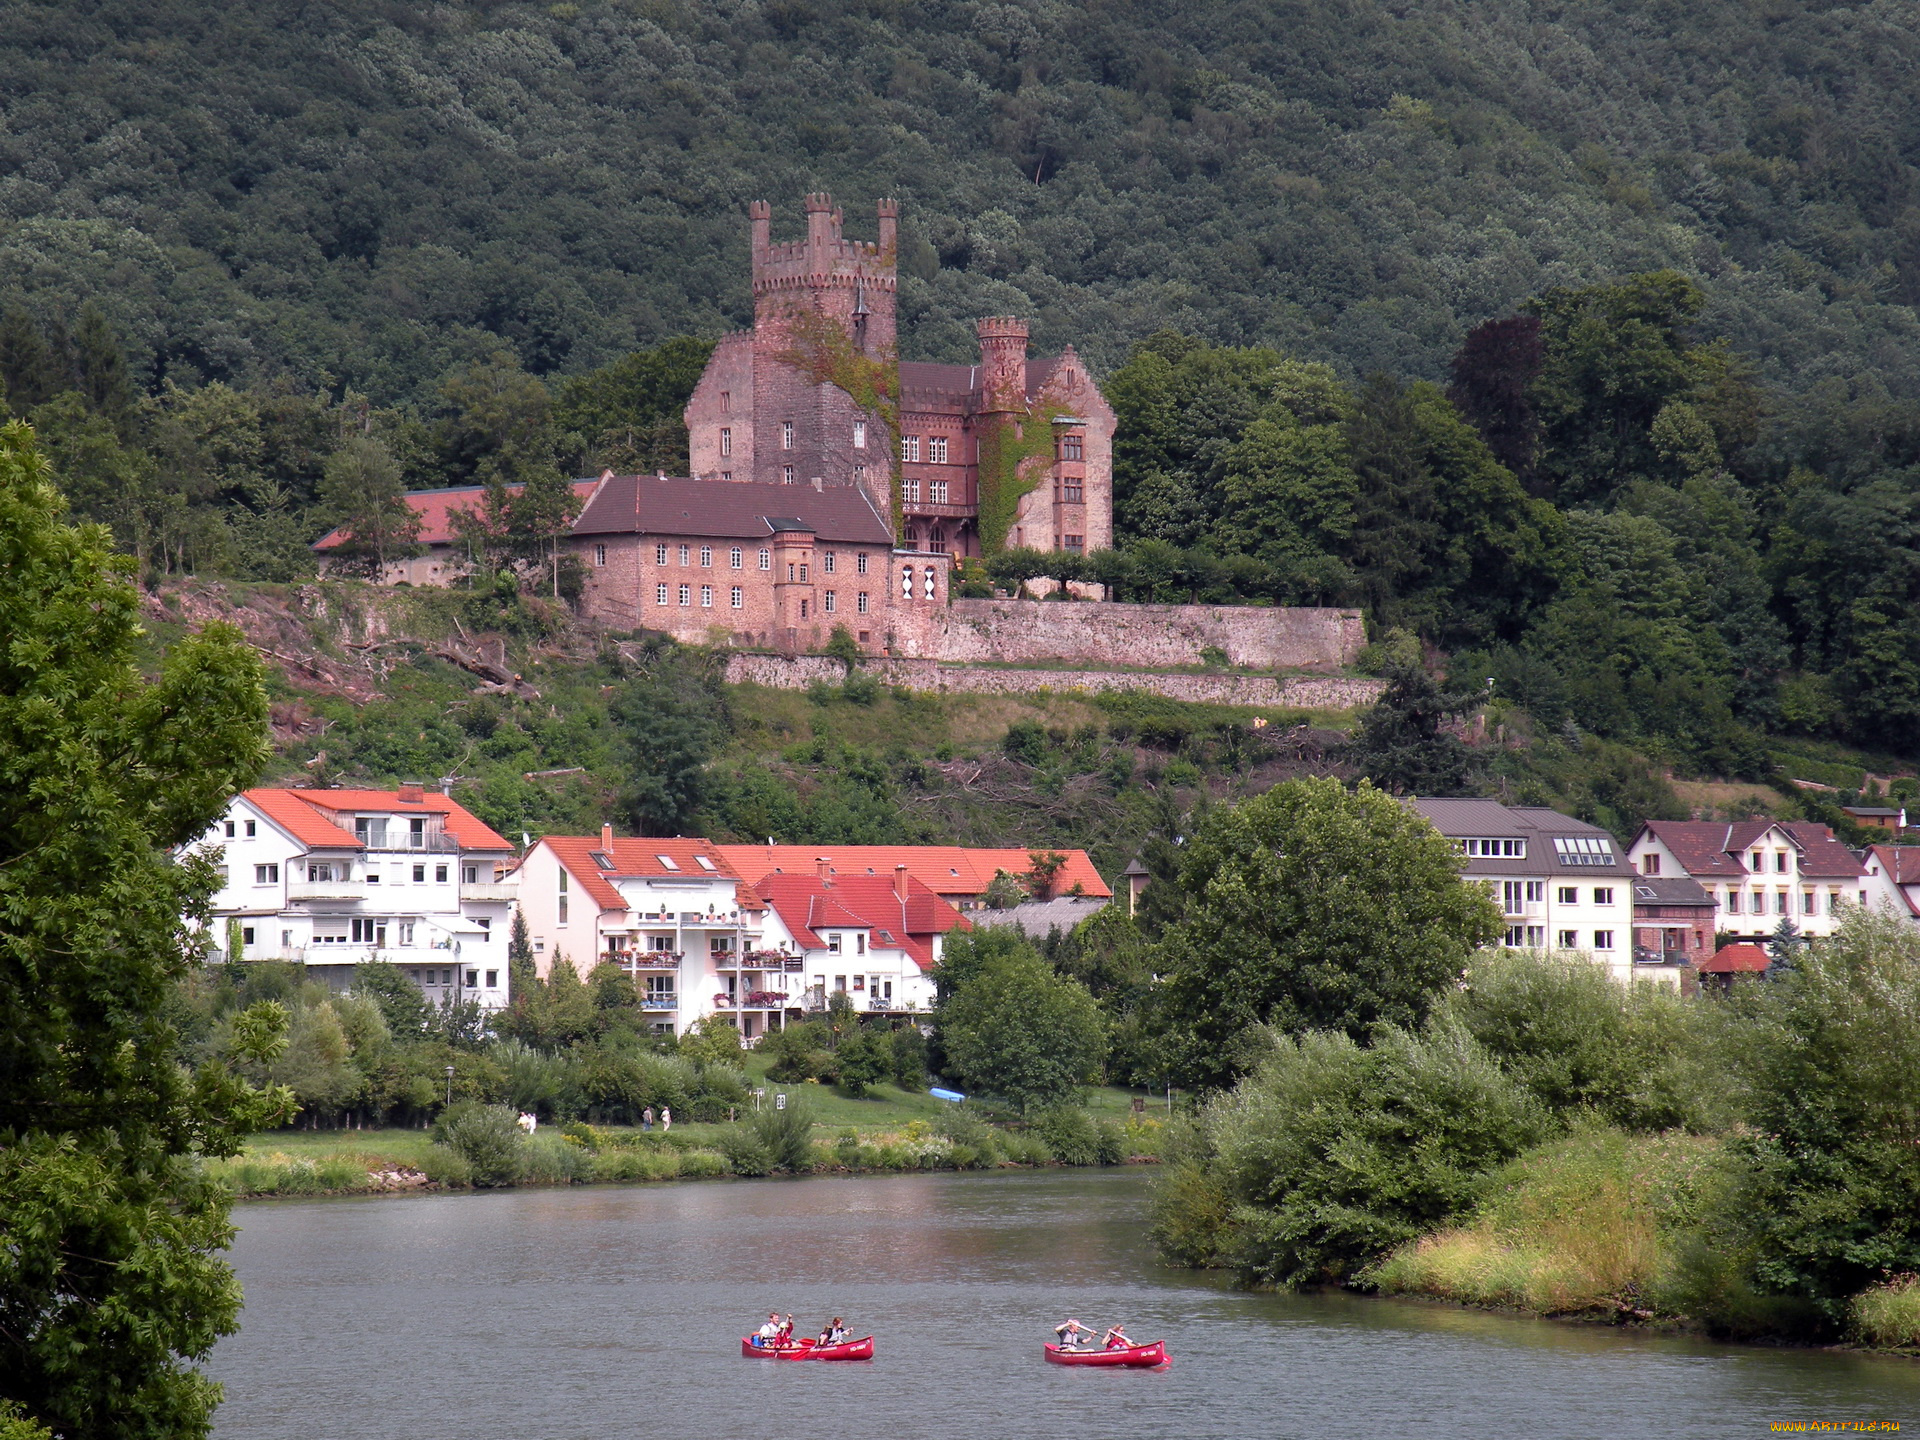 mittelburg, castle, germany, города, дворцы, замки, крепости, река, здания, замок, лодки, лес